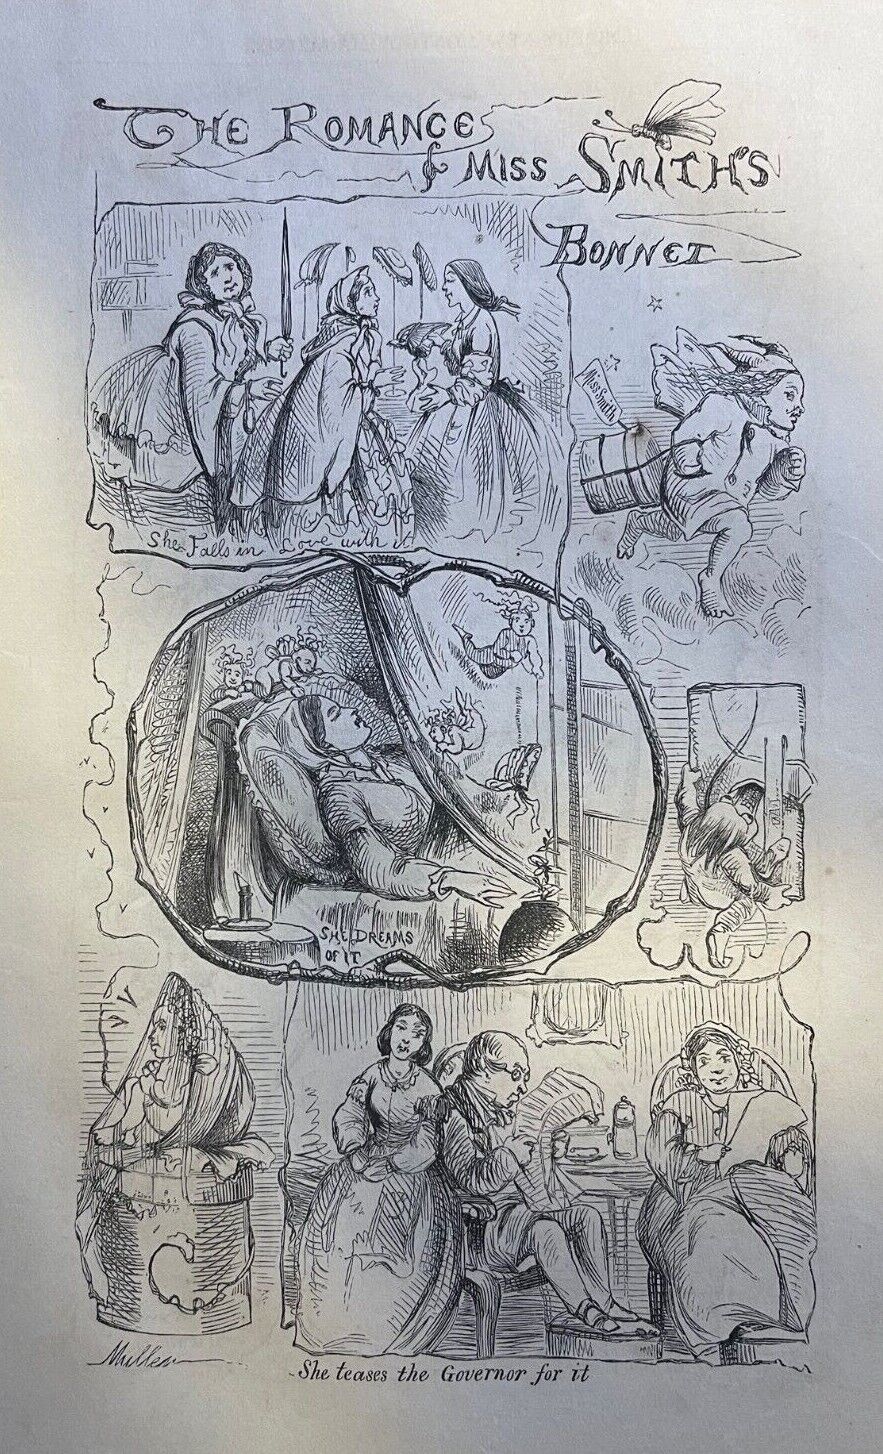 1862 Vintage Magazine Illustration The Romance of Mrs. Smith's Bonnet